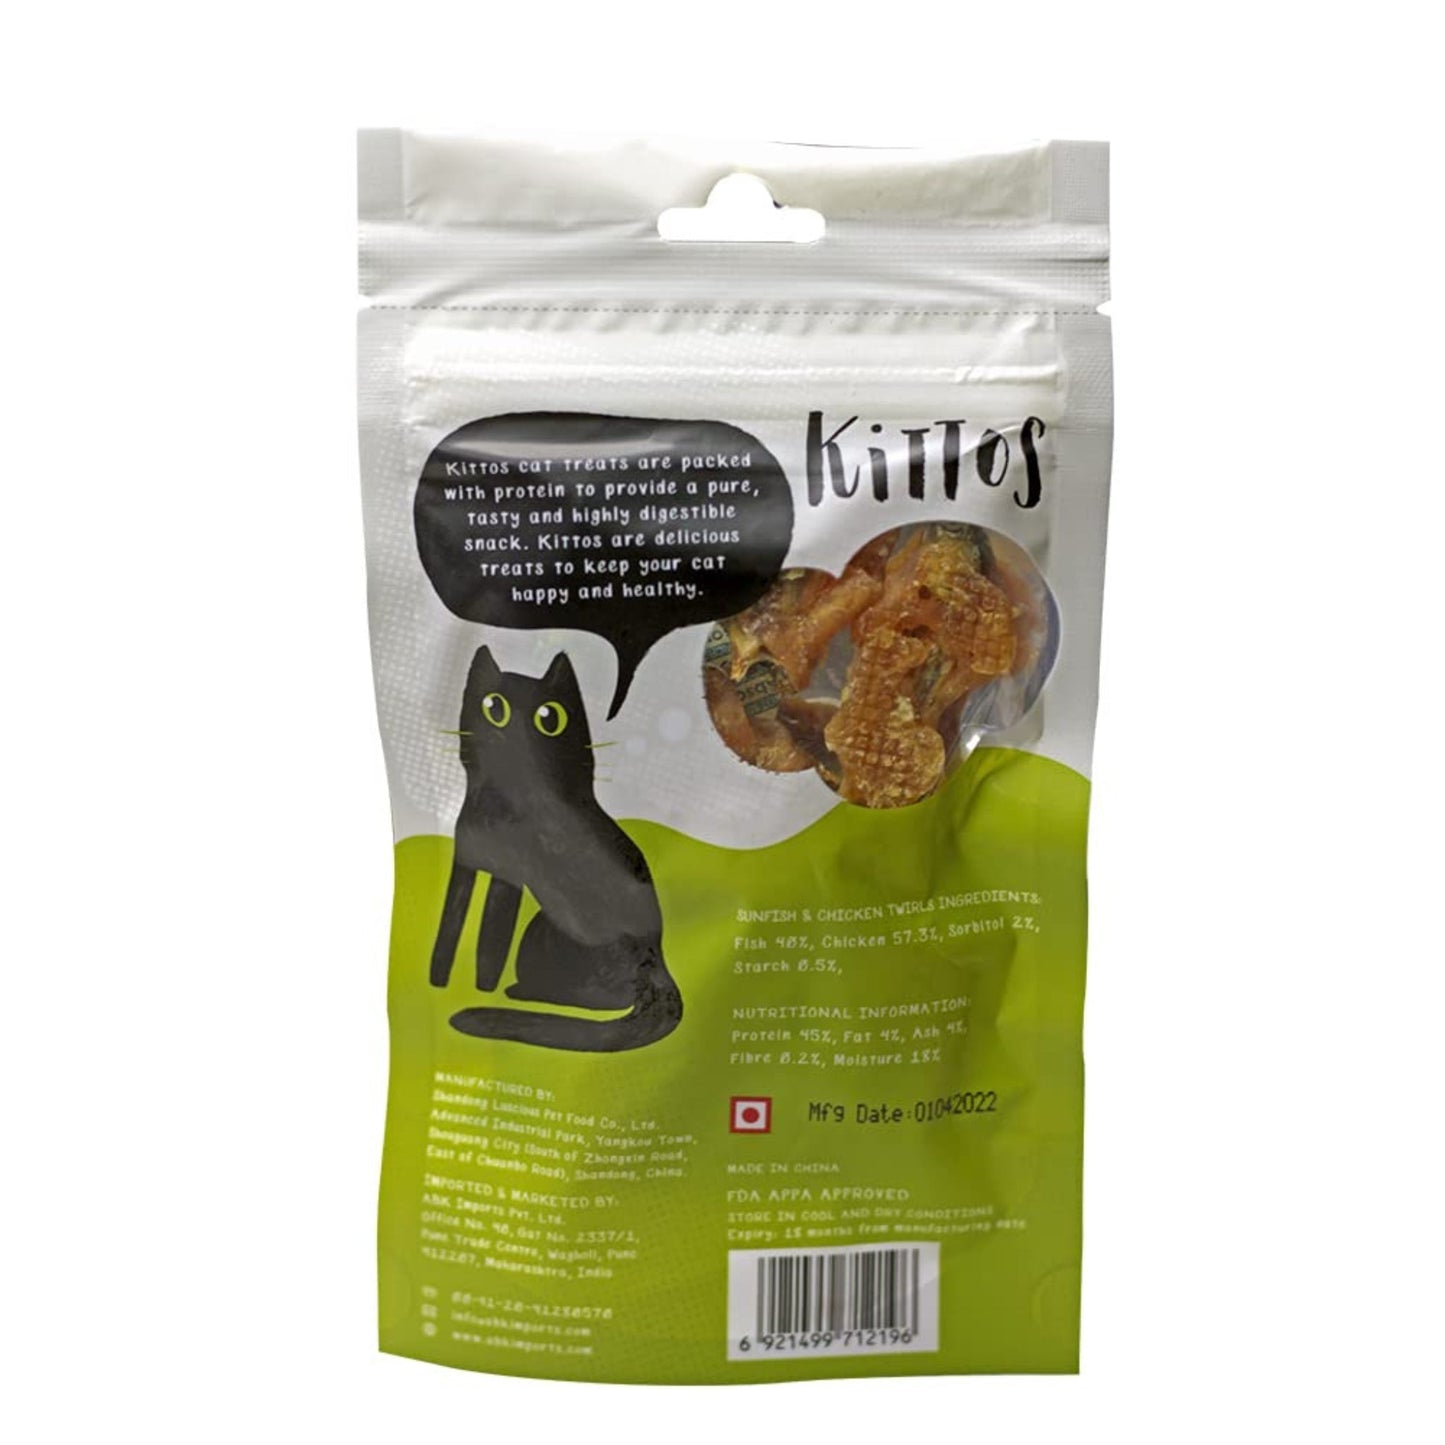 Kittos Sunfish & Chicken Twirls Cat Treat - 35gm, Pack of 6